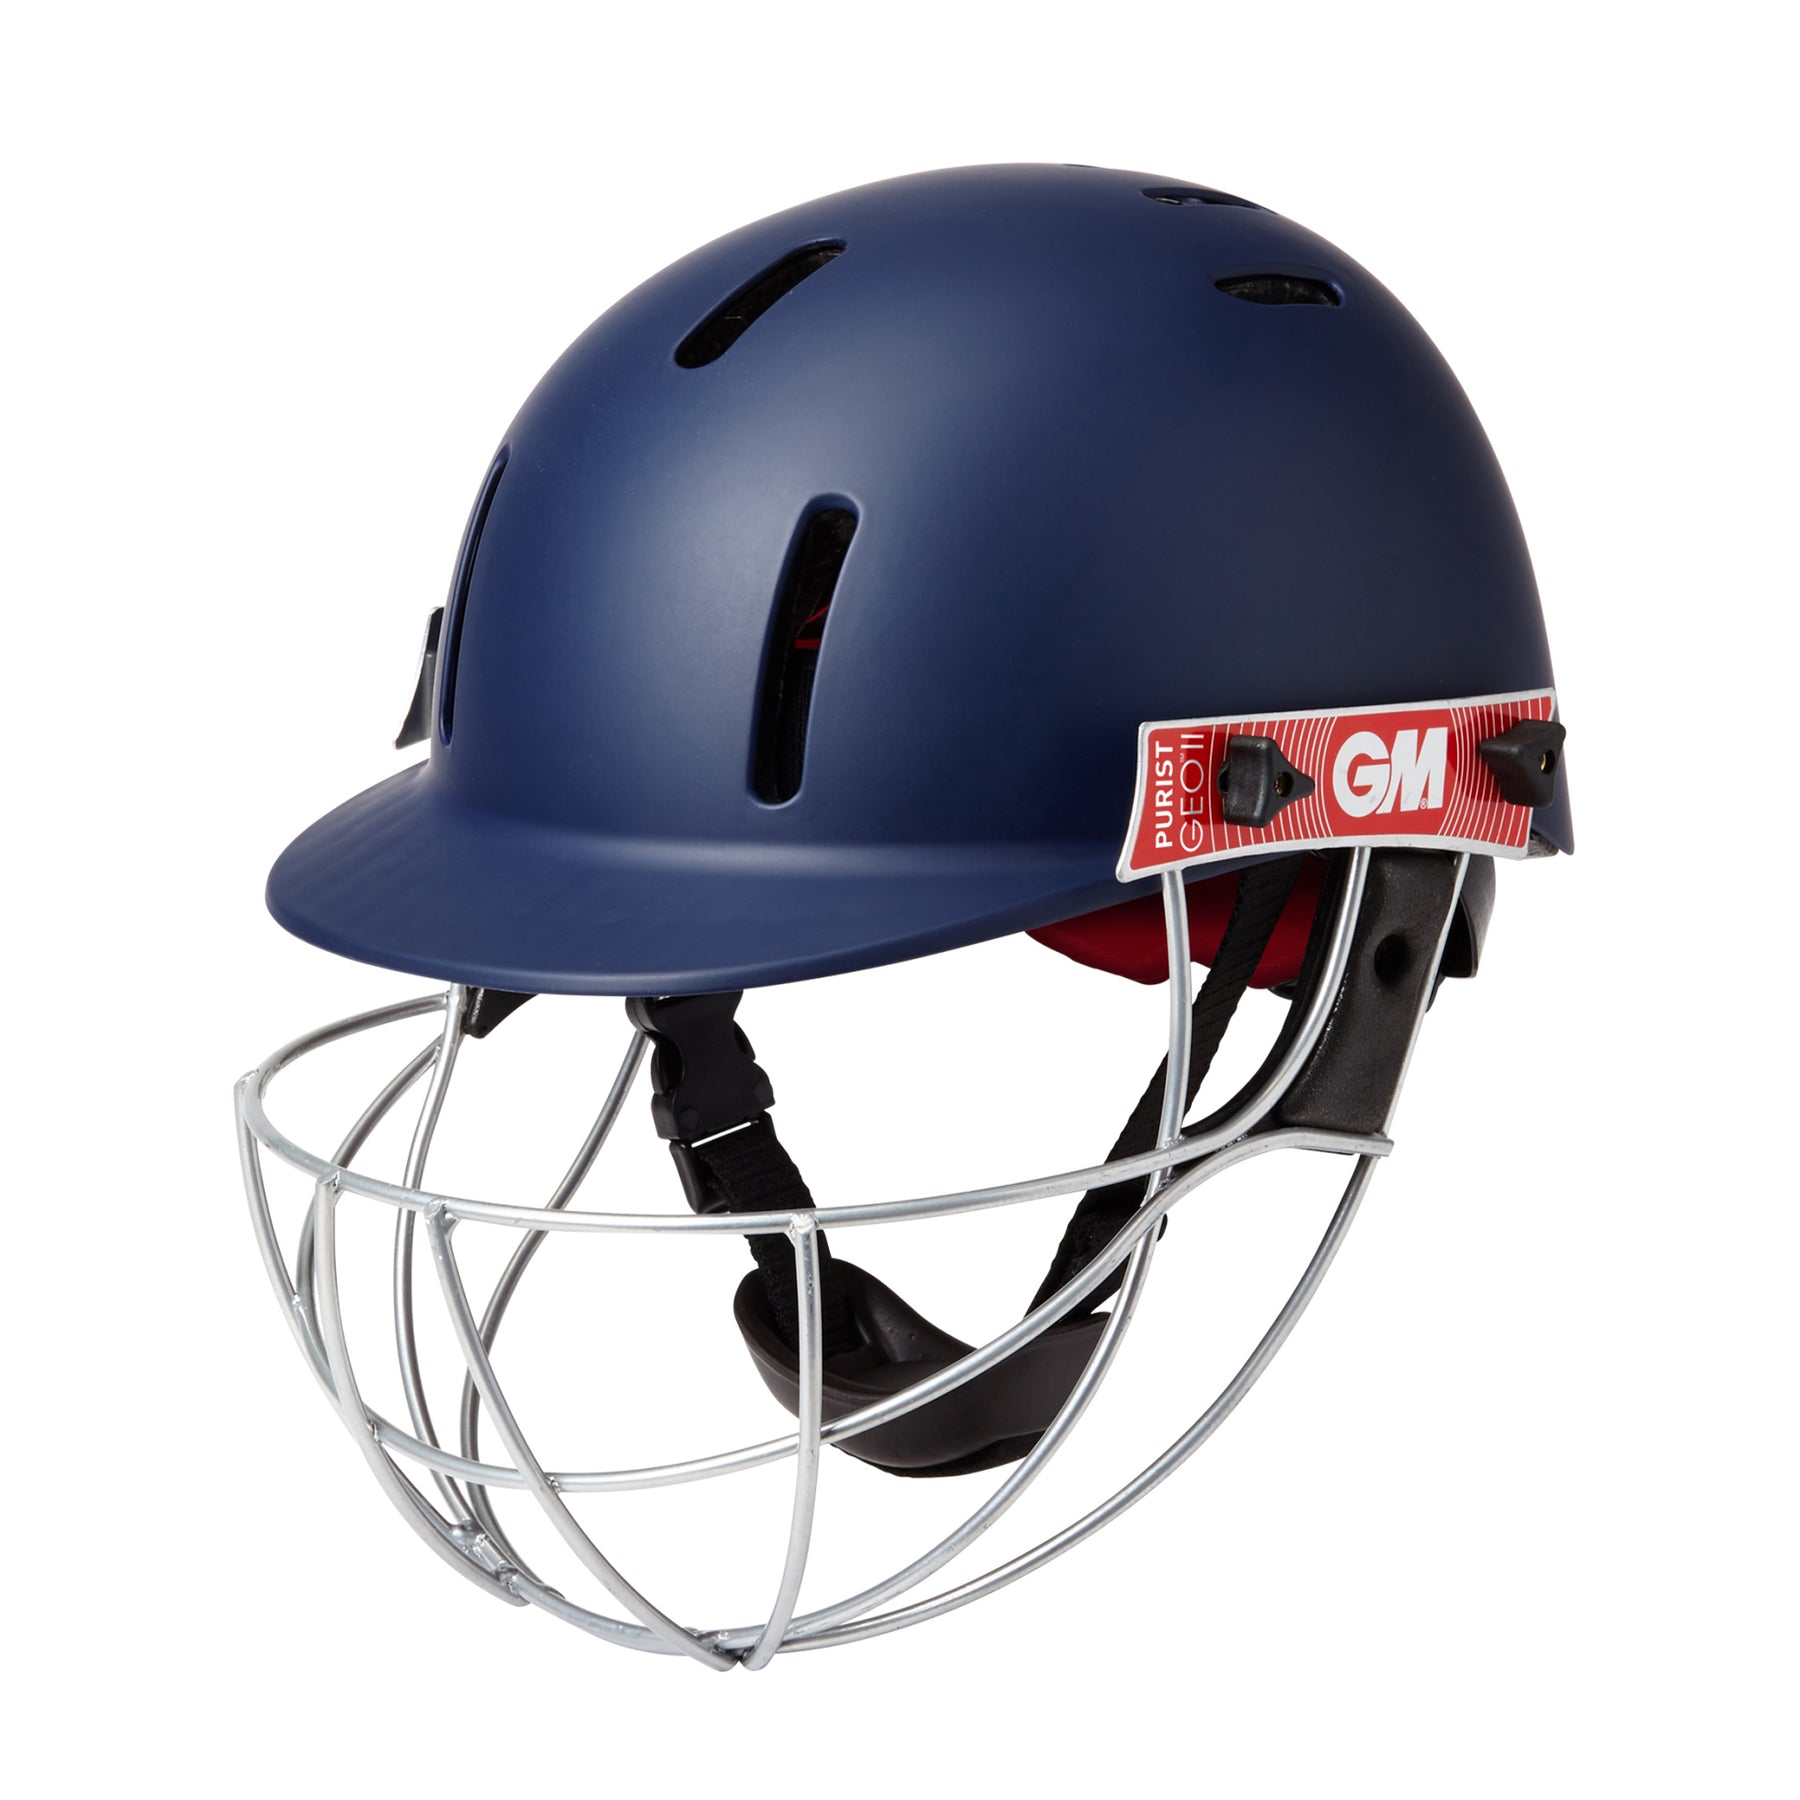 Gunn & Moore Purist Geo II Cricket Helmet: Navy